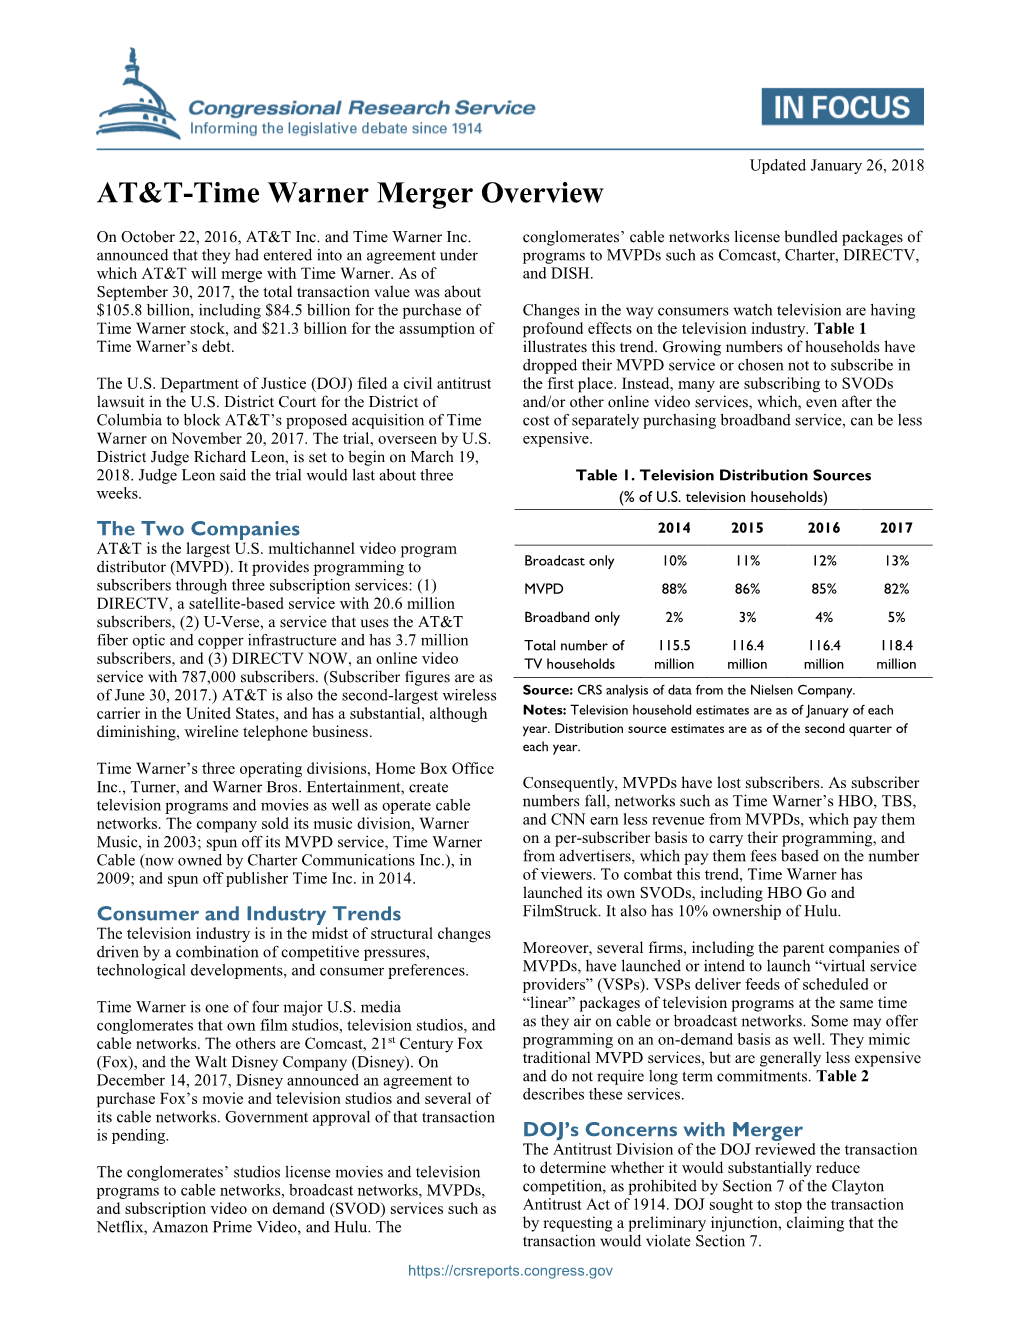 AT&T-Time Warner Merger Overview